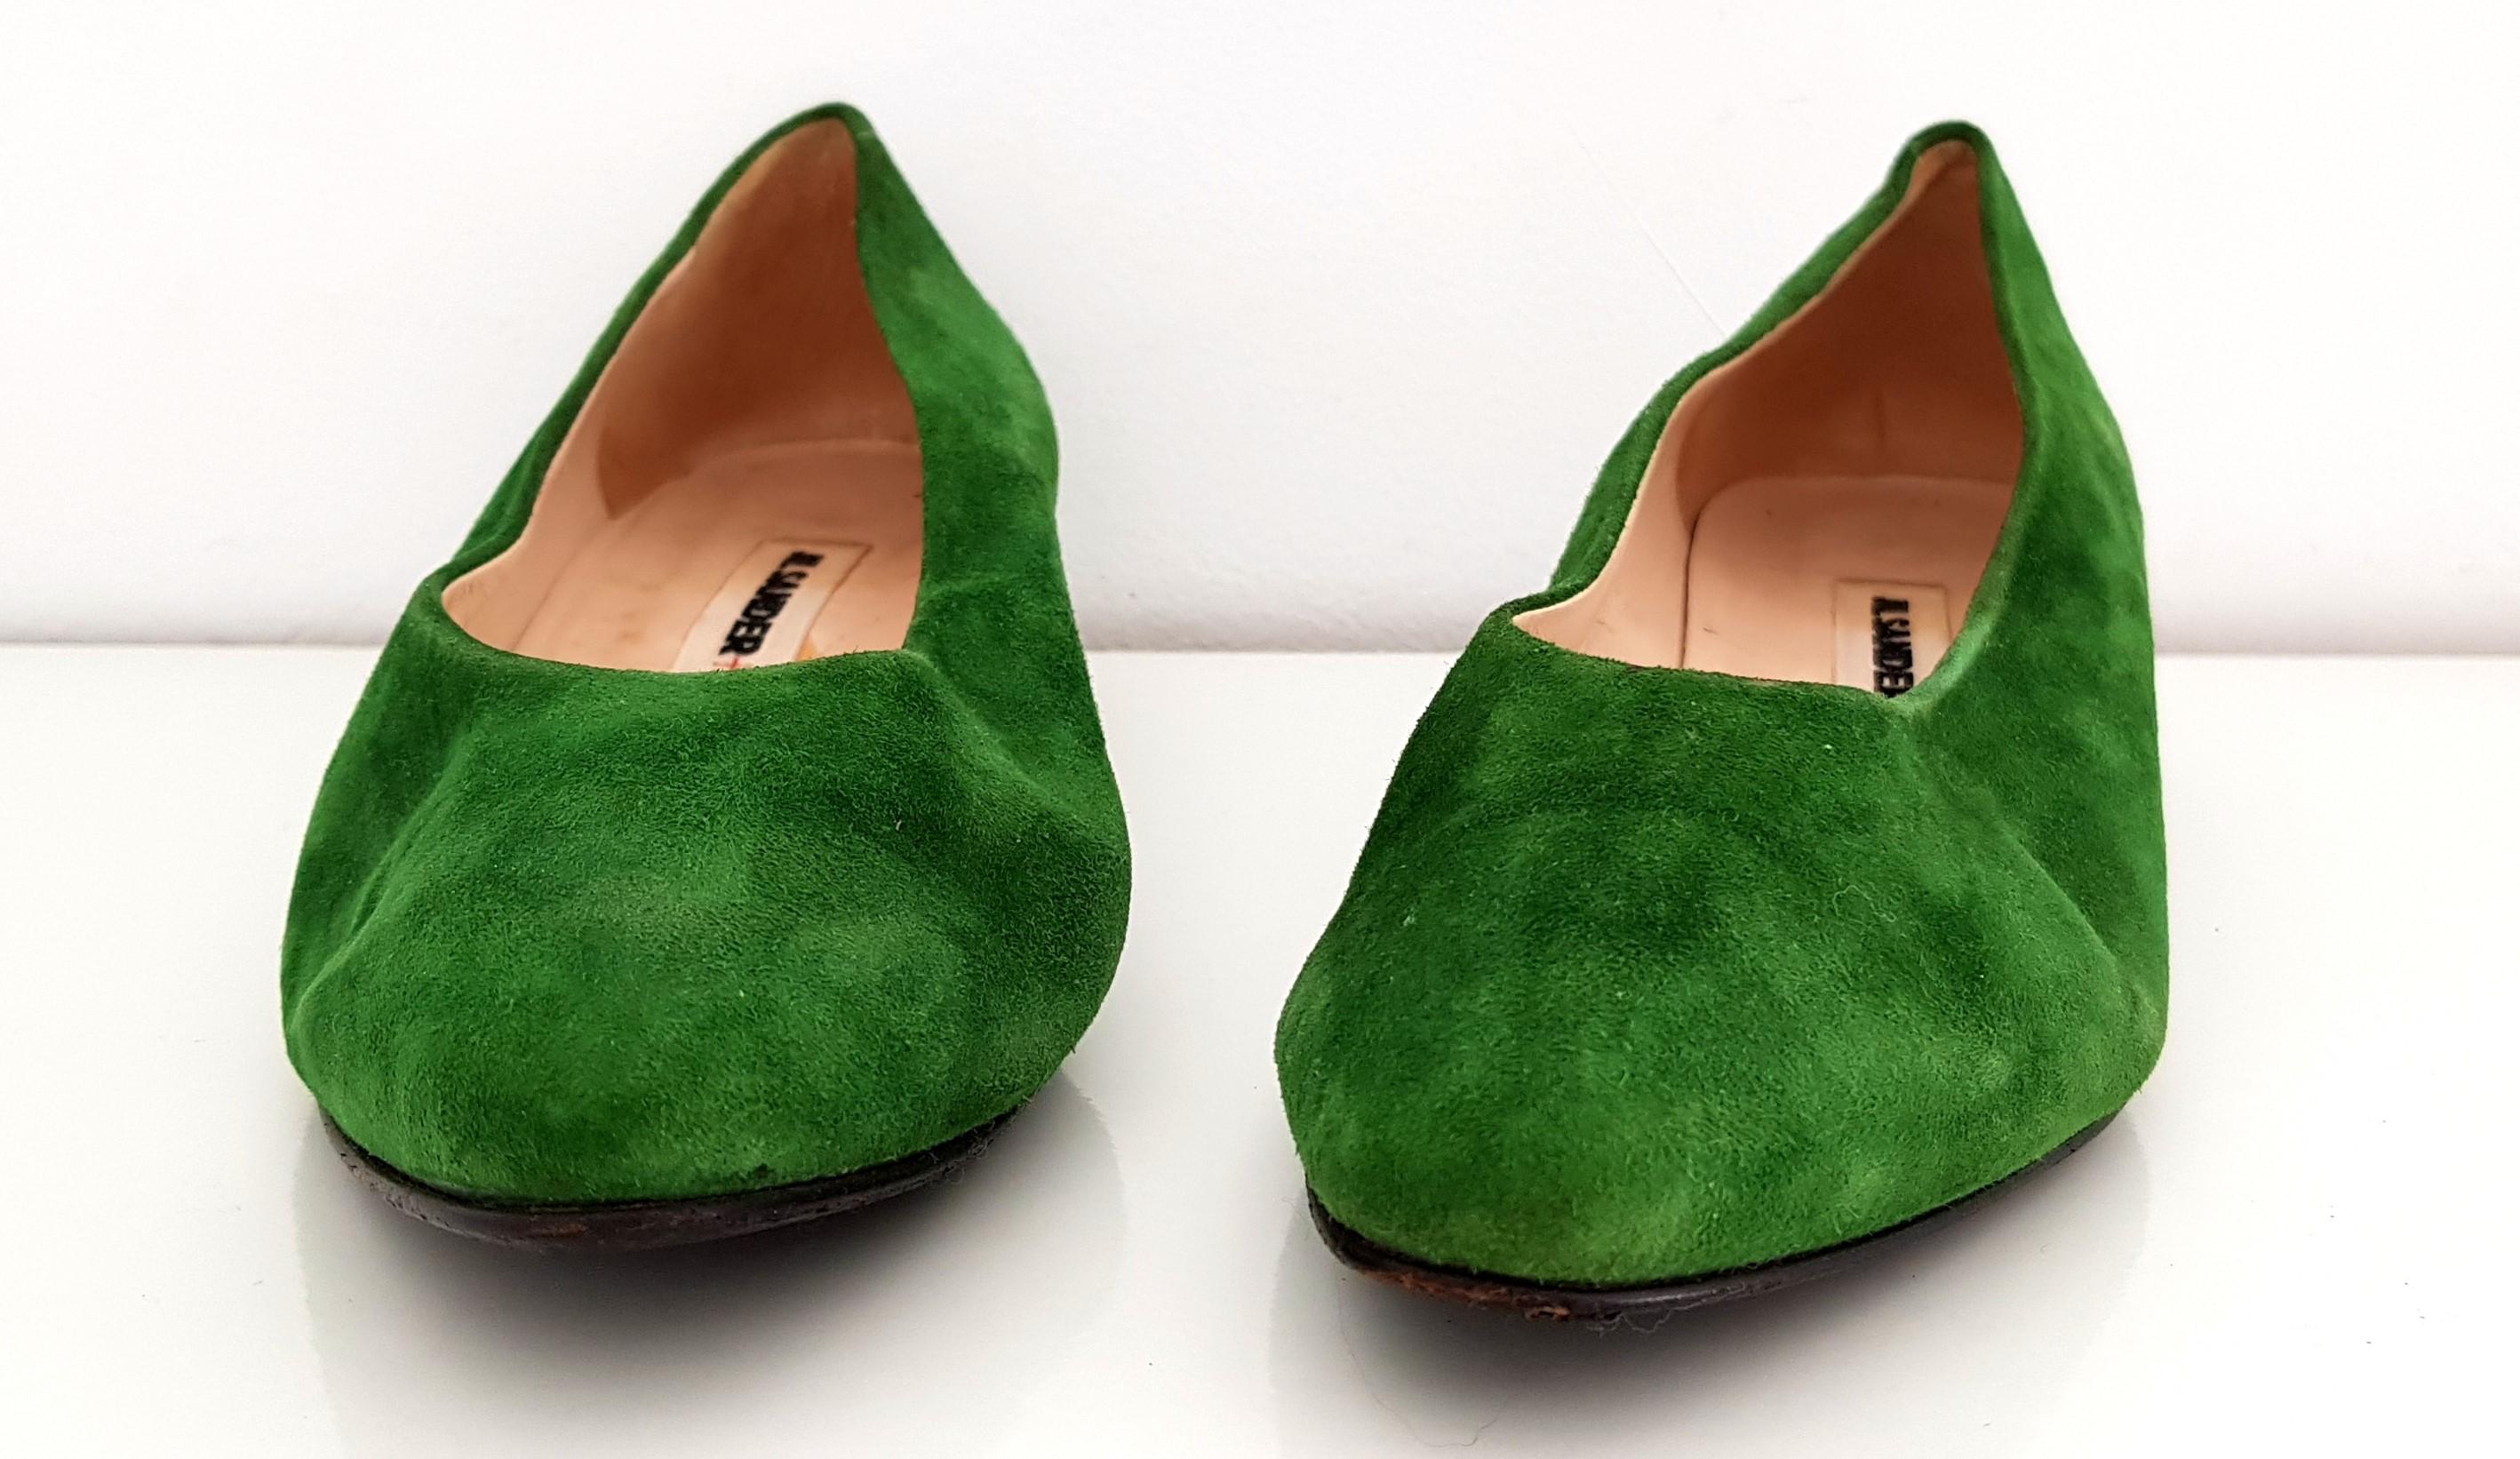 Jil Sander's Green Suede Ballerines - Size 39.5 (EU)  (Grün)